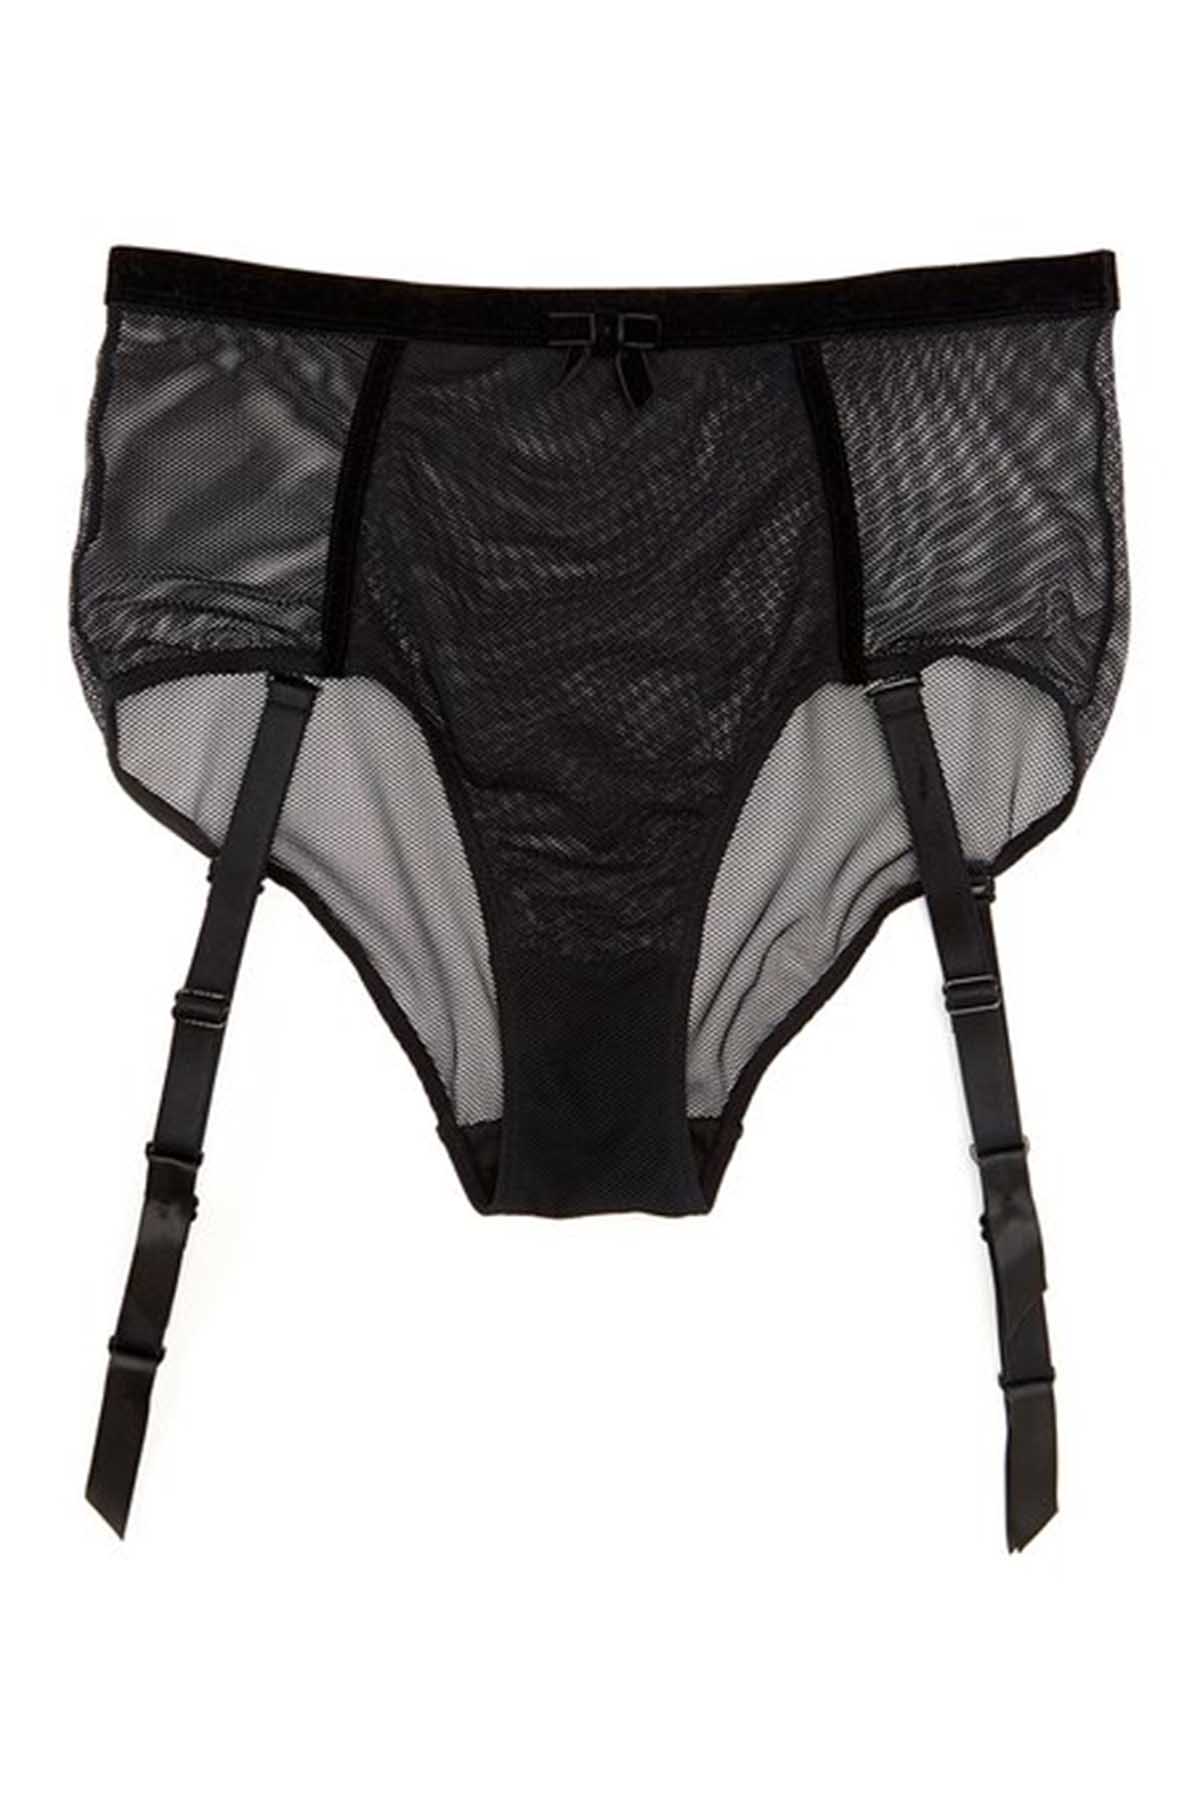 Claudette Black Fishnet Pin-Up Panty